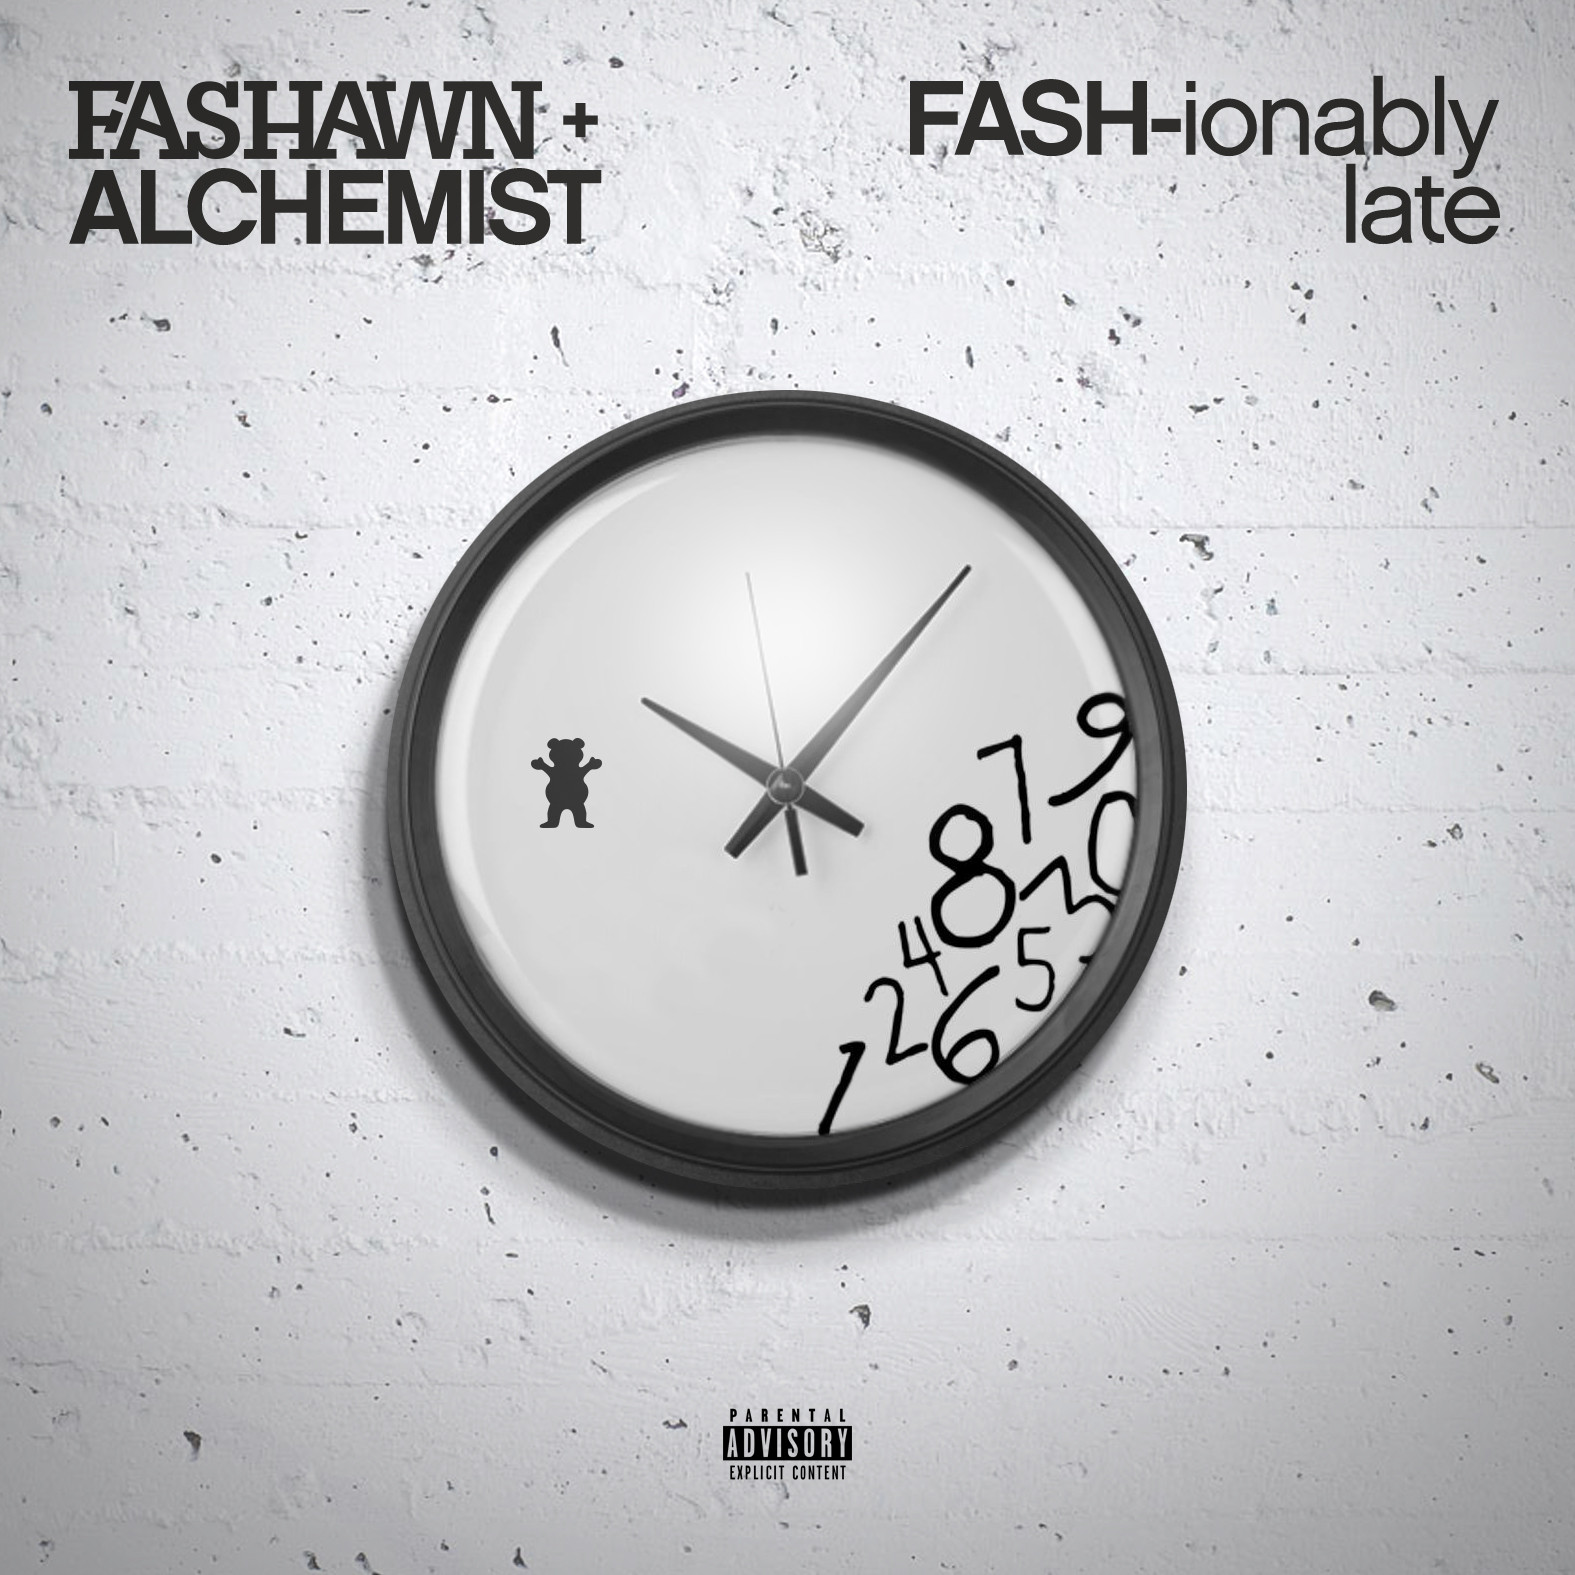 Fashawn___the_alchemist_-_fash-ionably_late